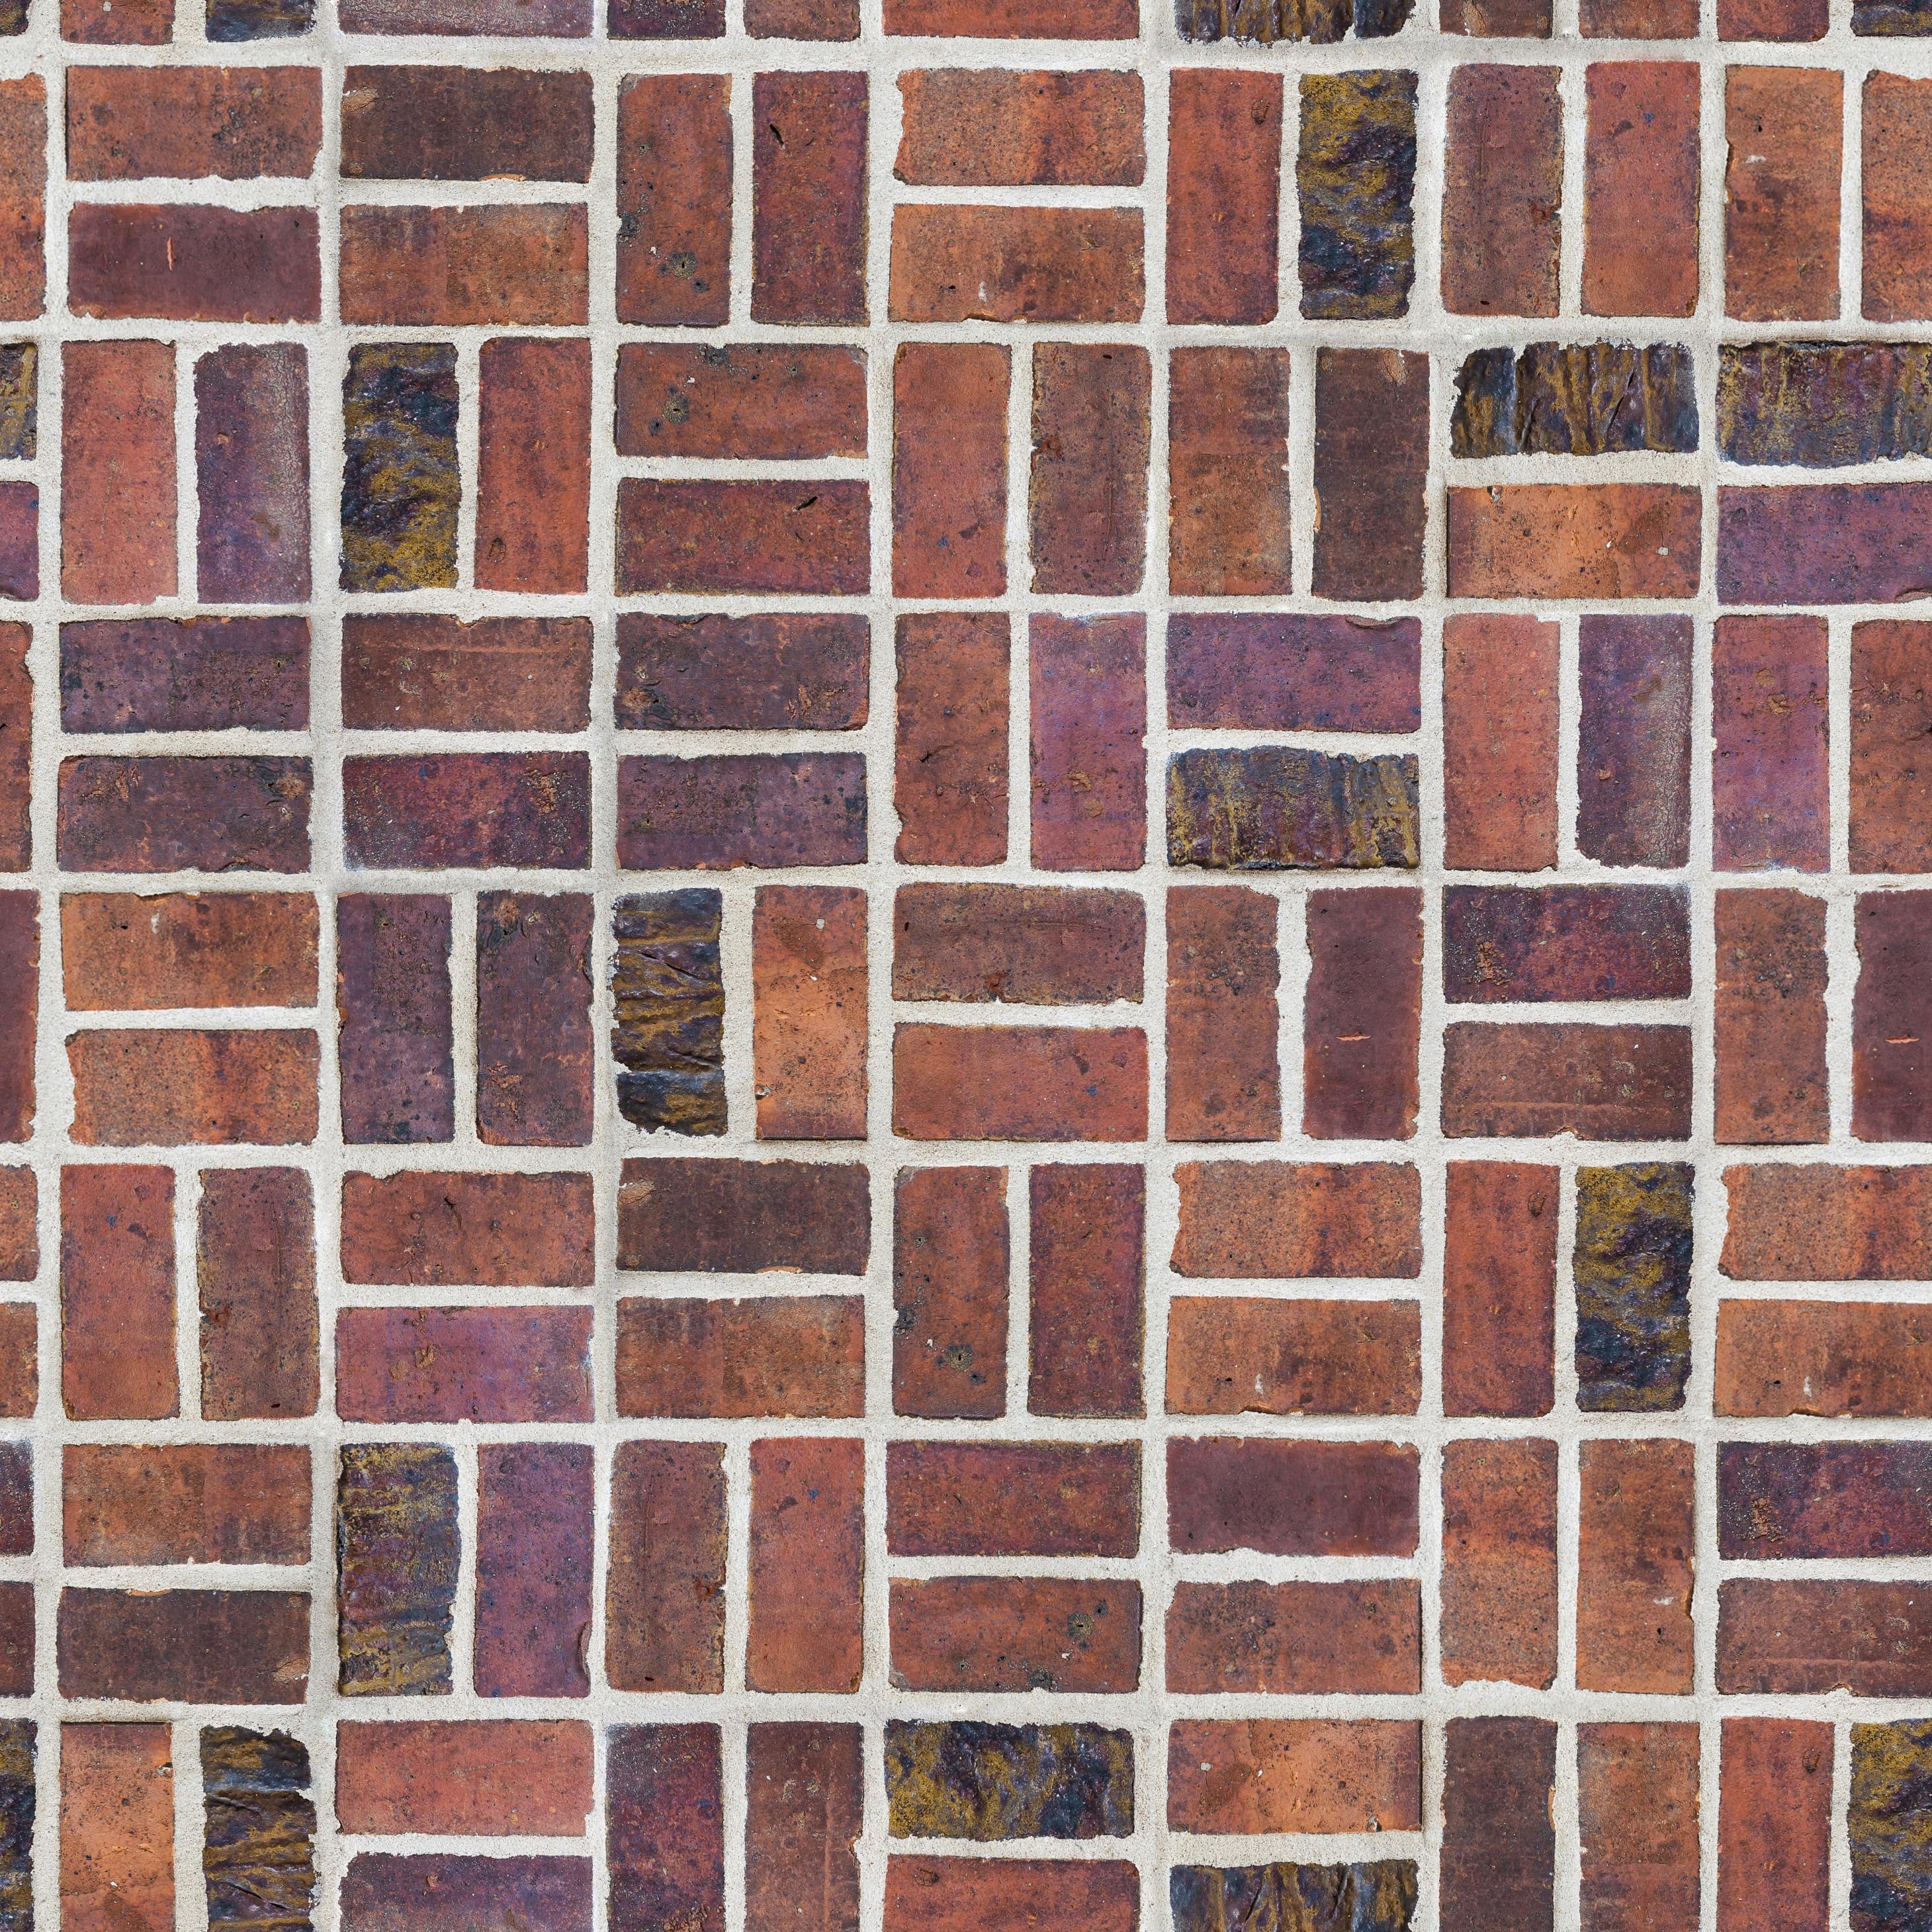 Brick type tiles